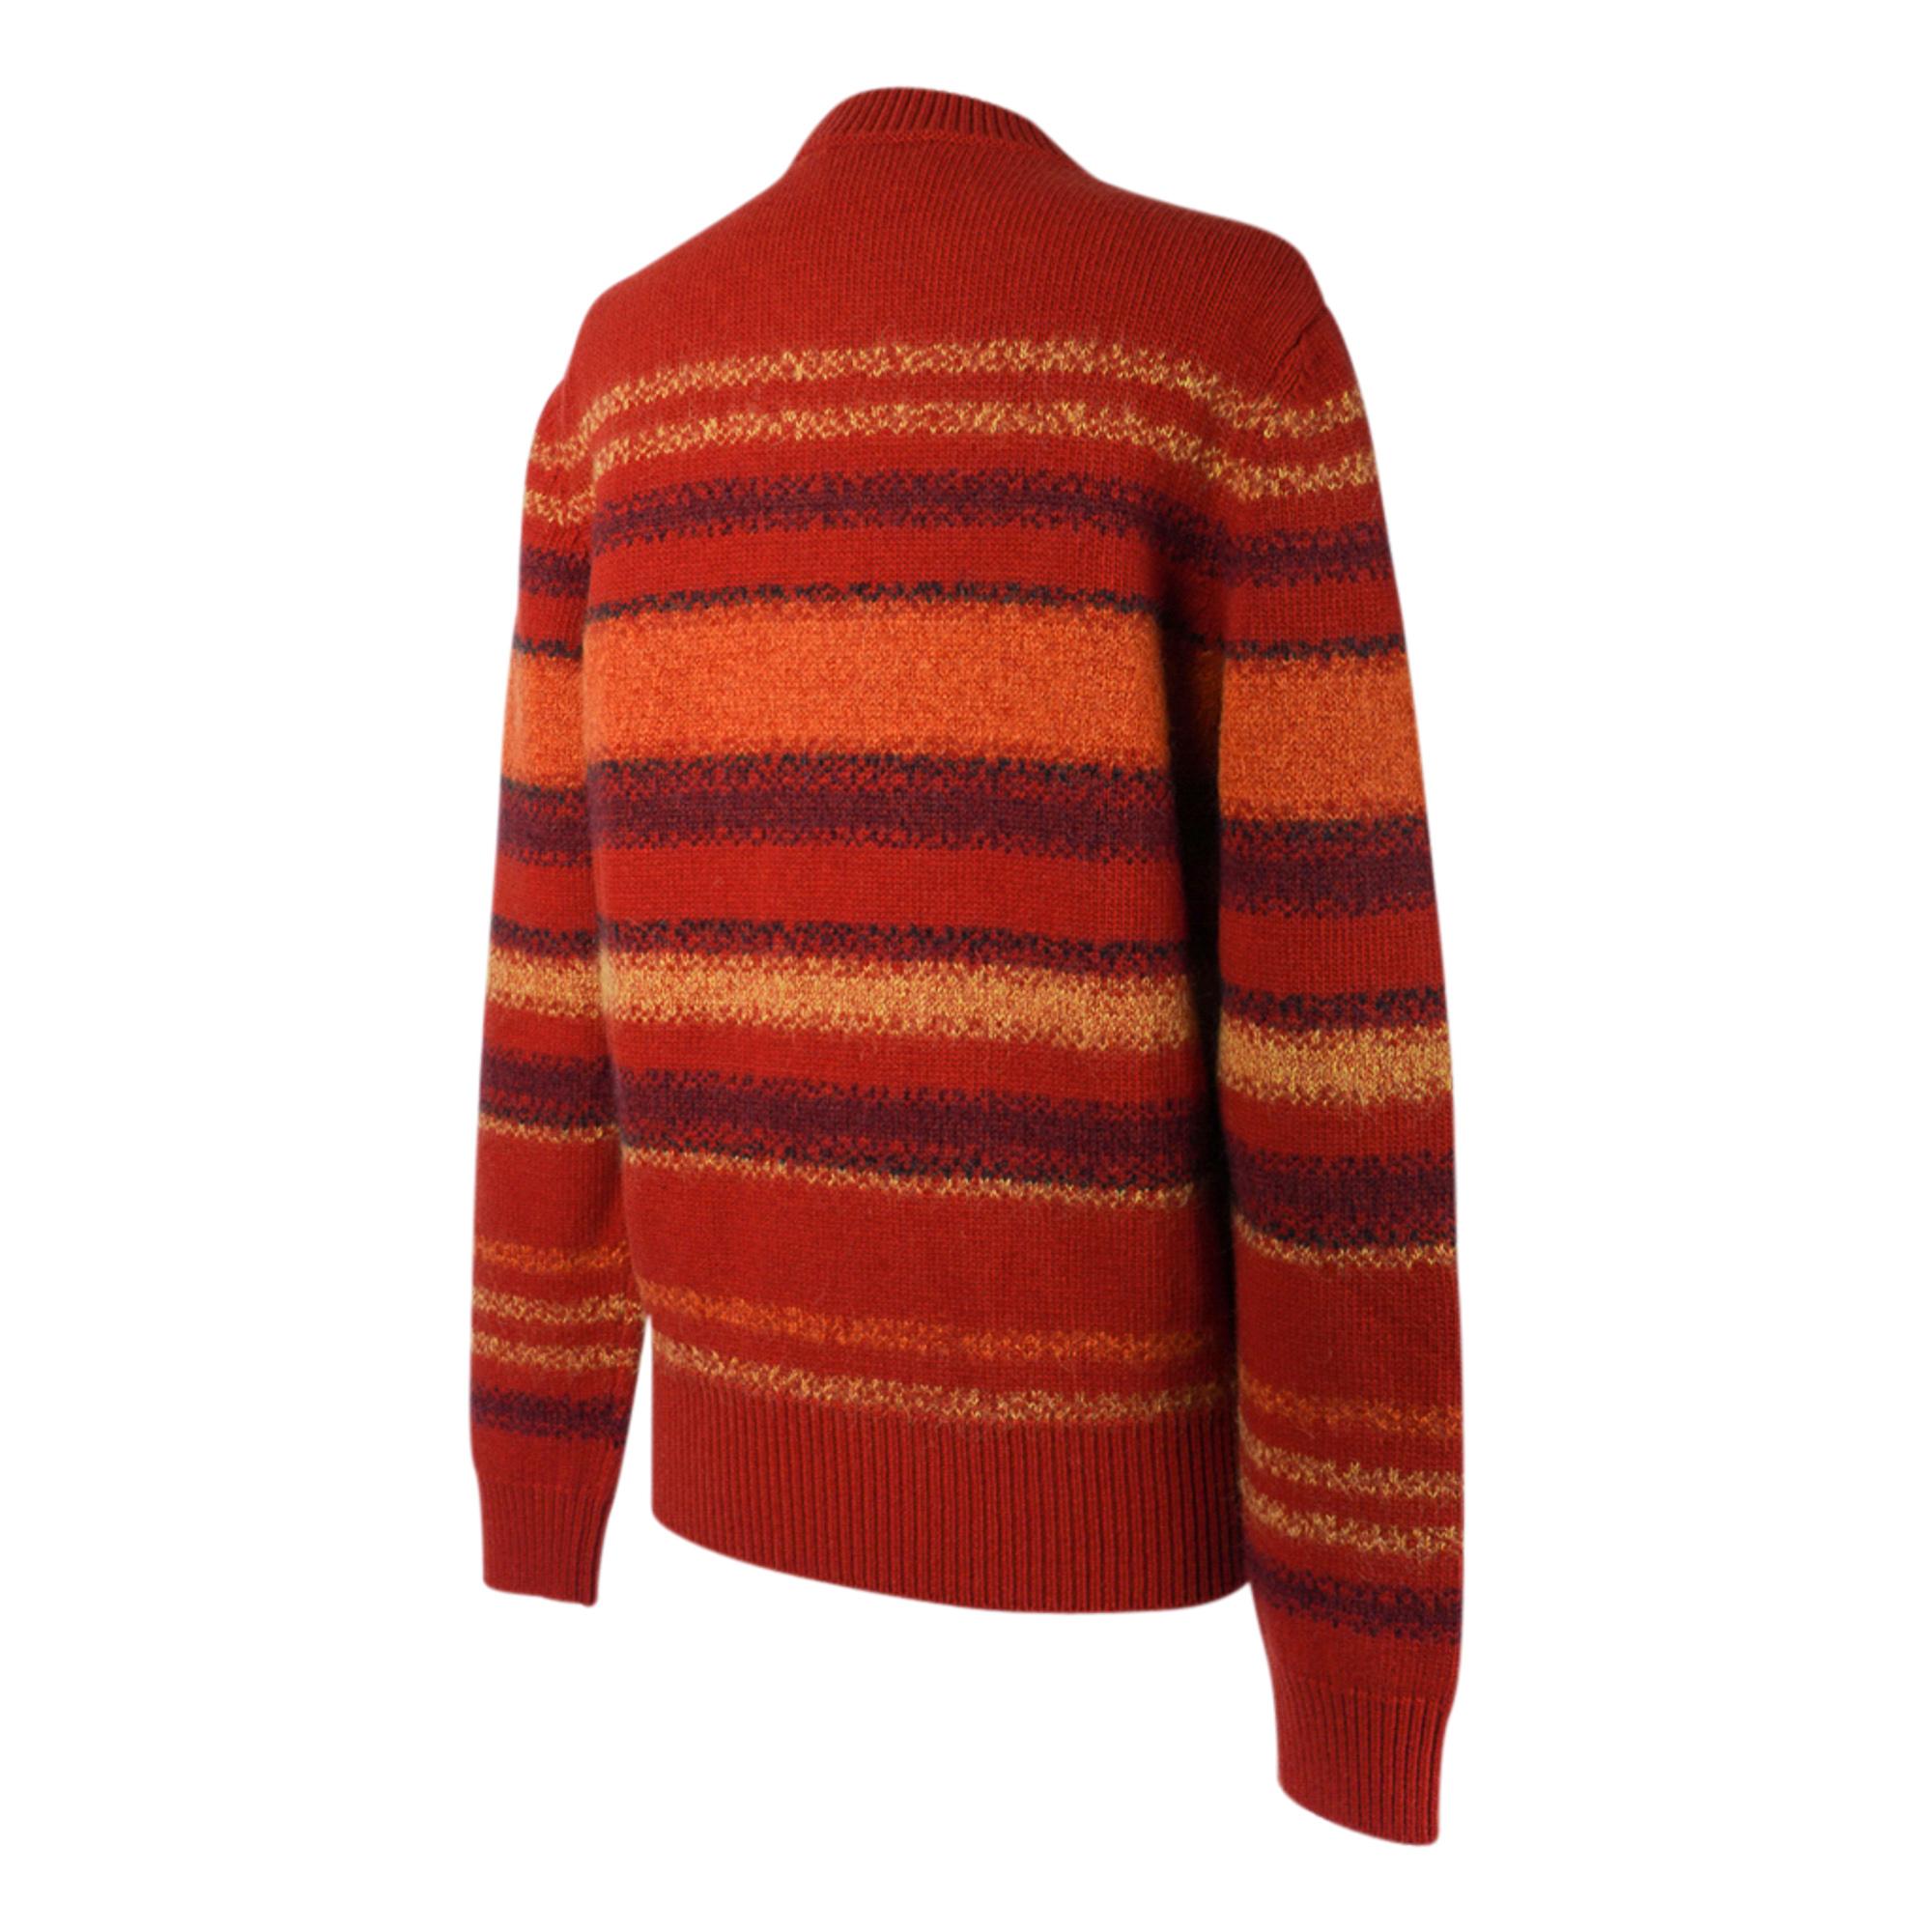 Red Hermes Men's Sweater Rayures Fondues (Melted Stripes) Orange Brulee Wool M For Sale